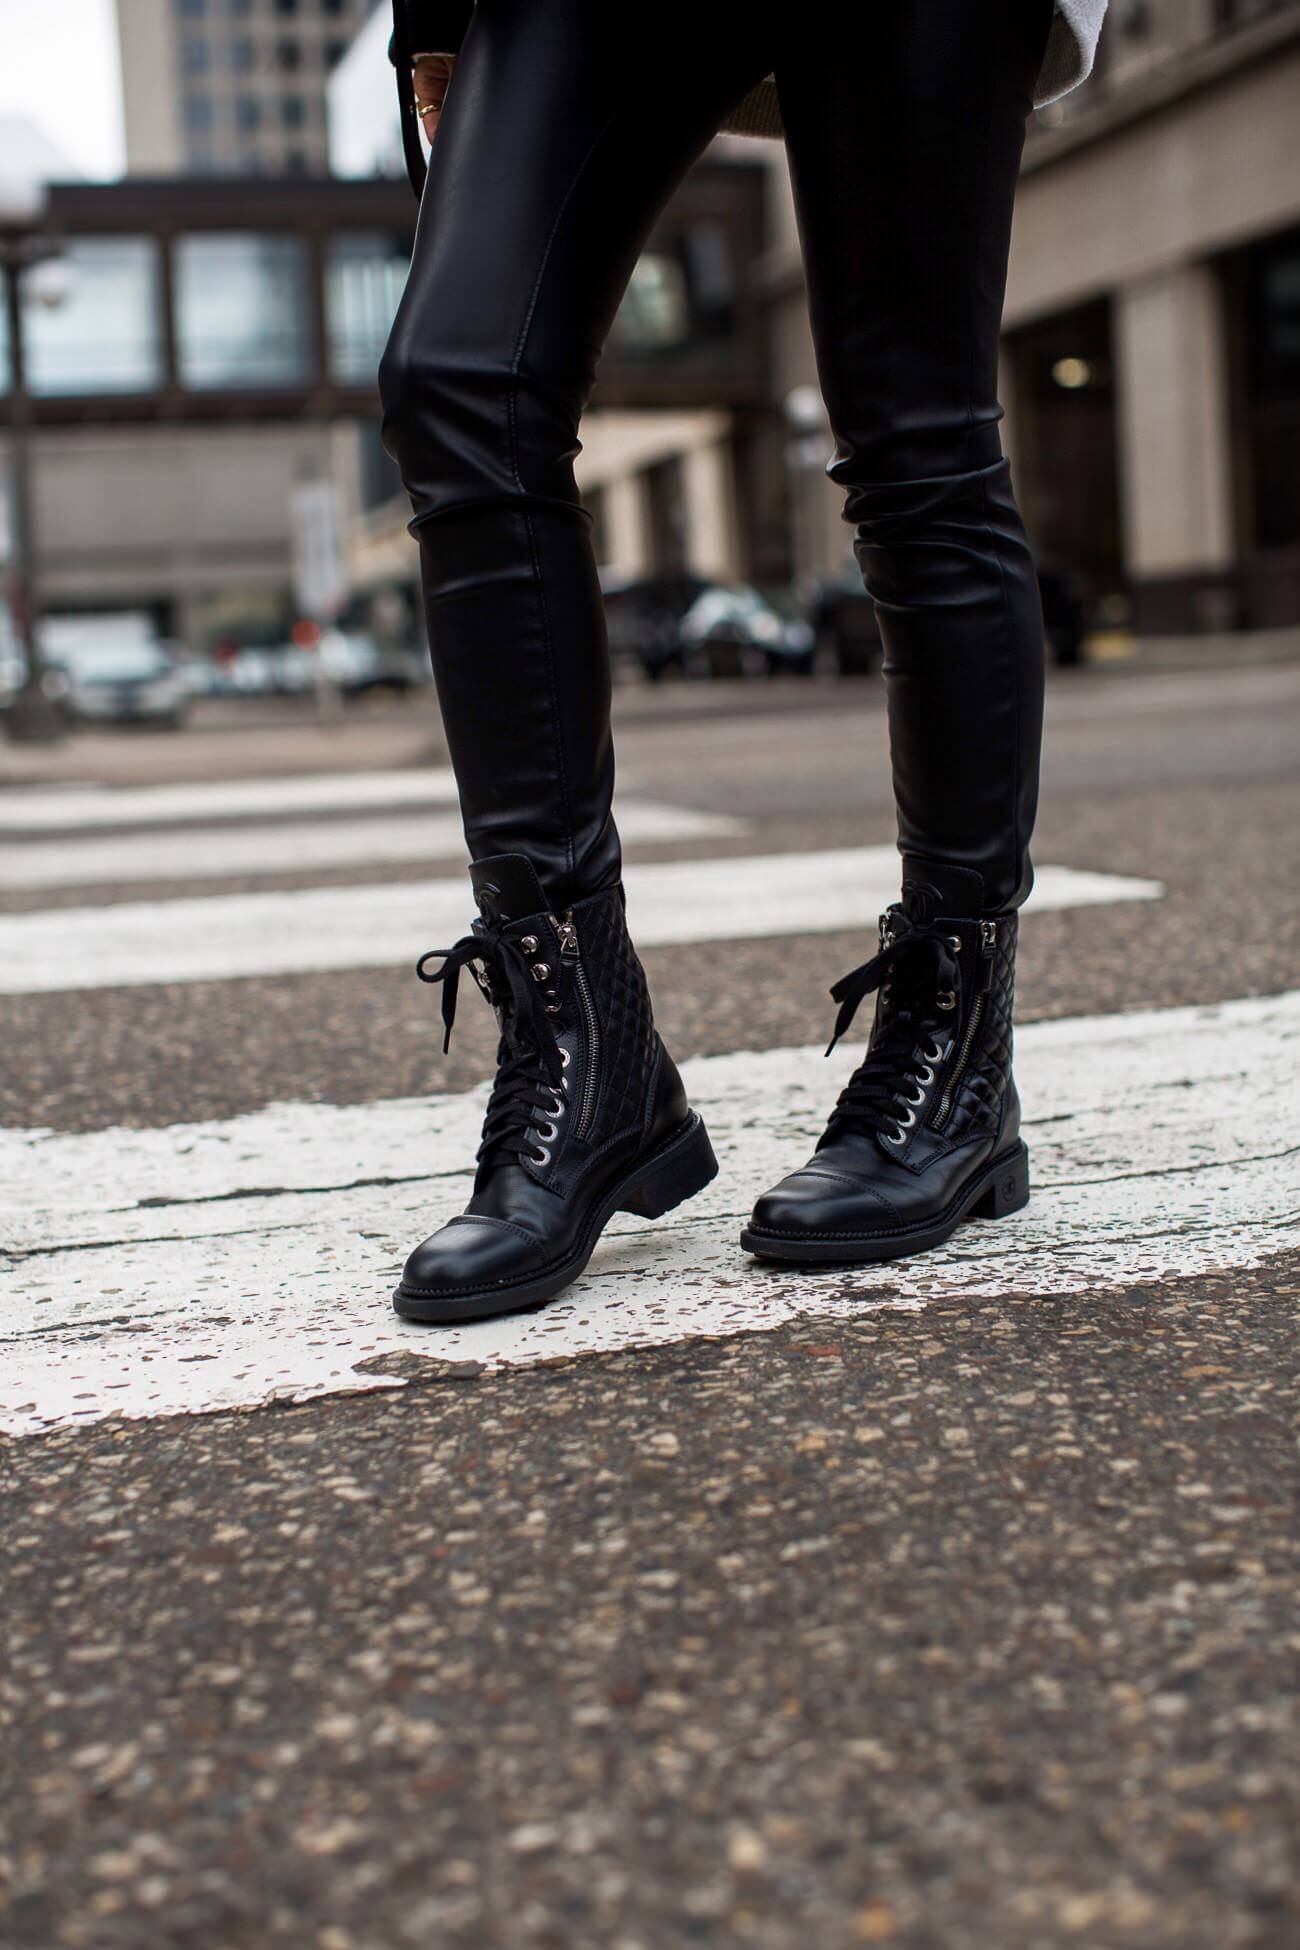 fashion blogger mia mia mine wearing chanel combat boots from ebay